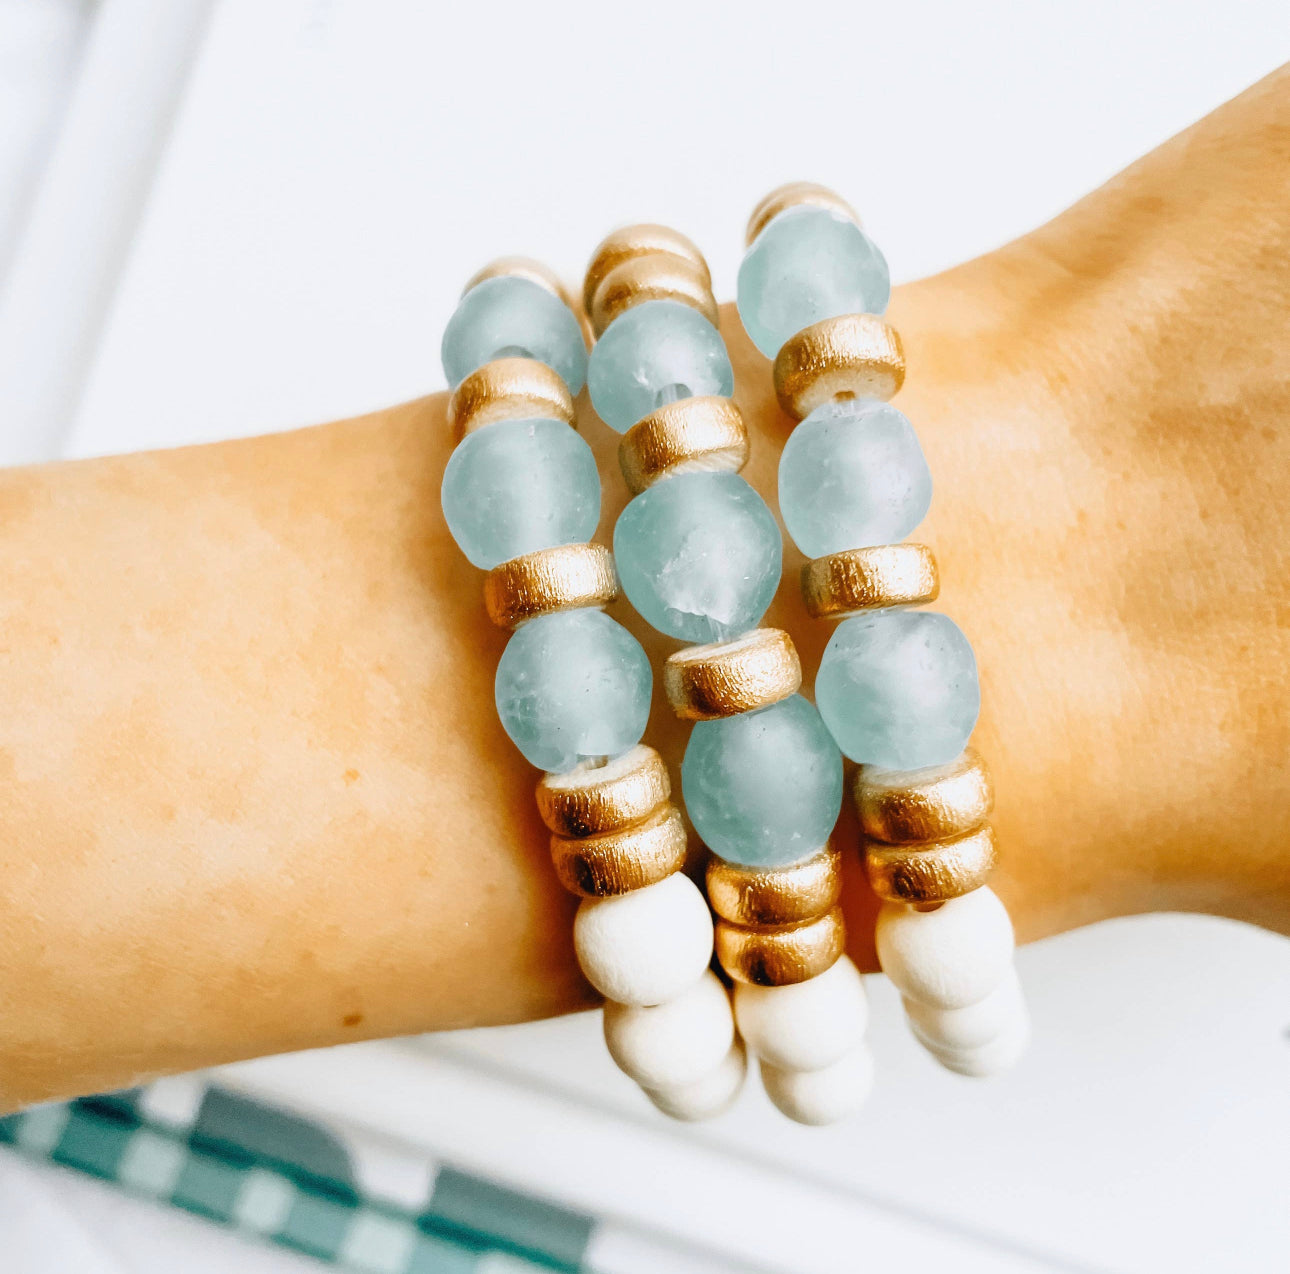 Three Ocean Island Bracelets on wrist that are Handmade in the USA